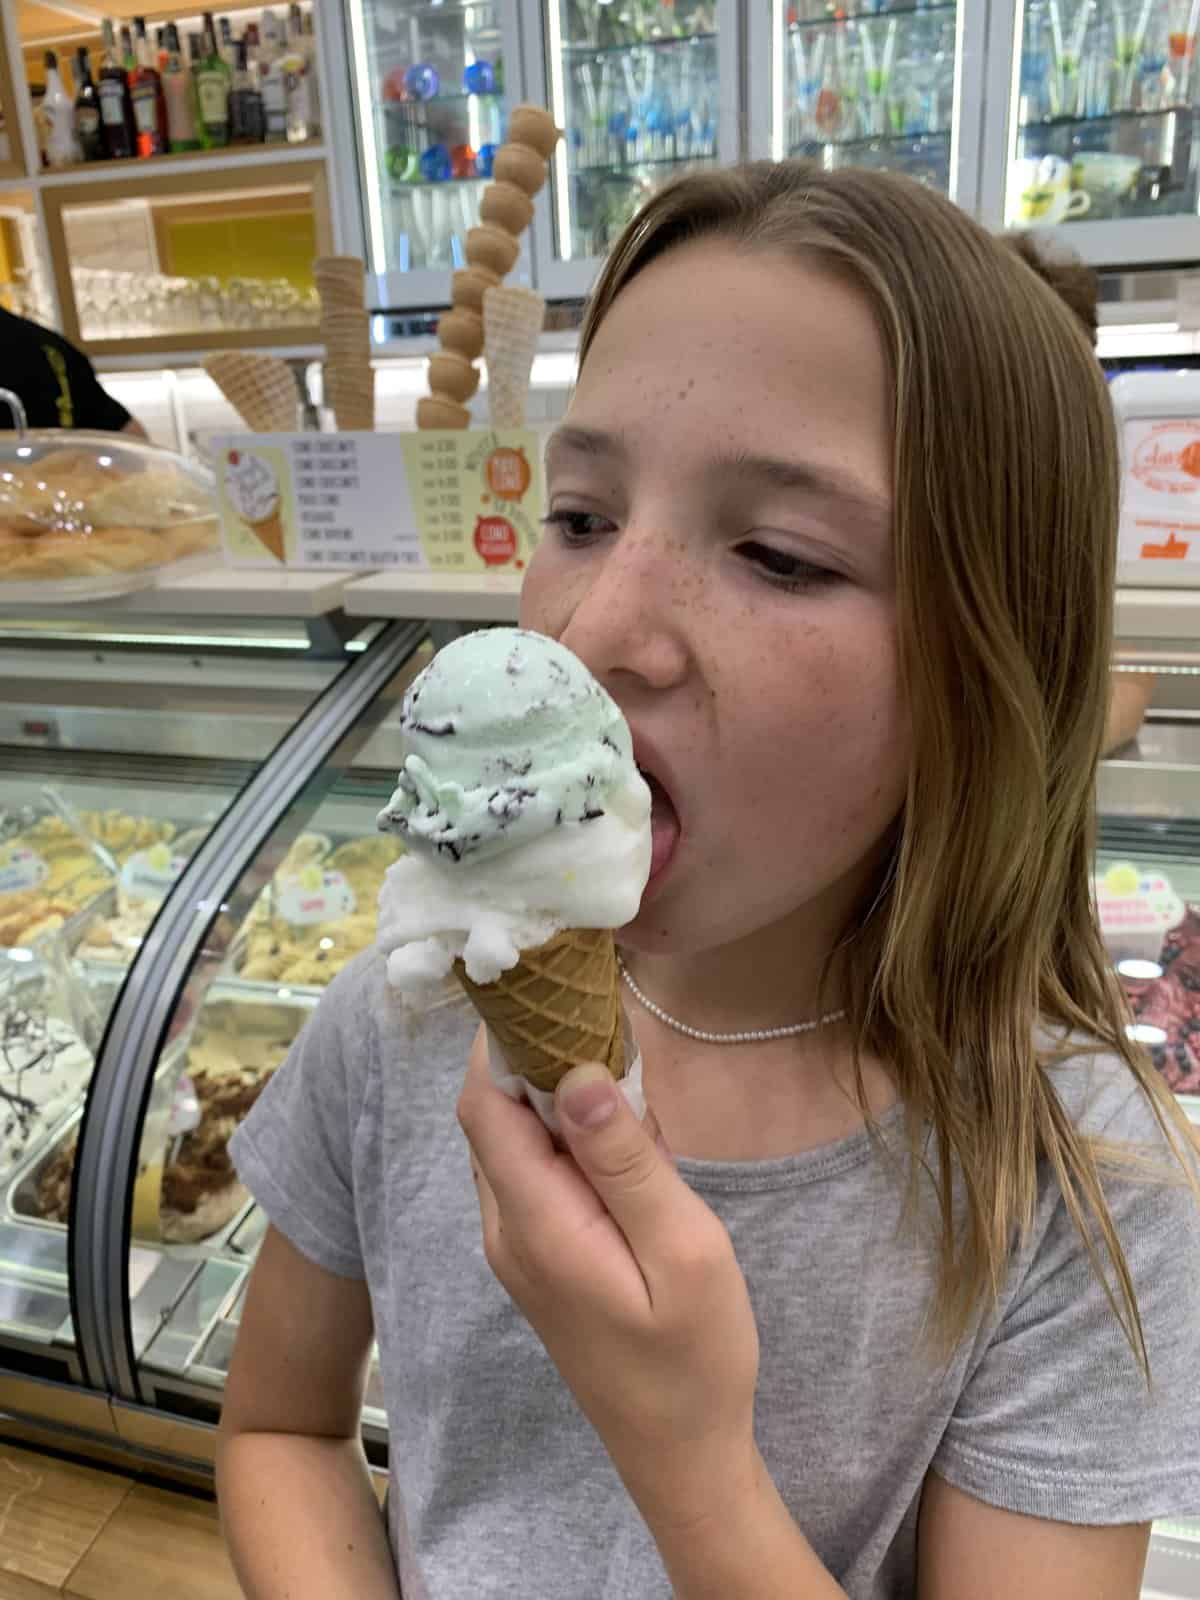 Miss E eating gluten-free gelato in a gluten-free cone